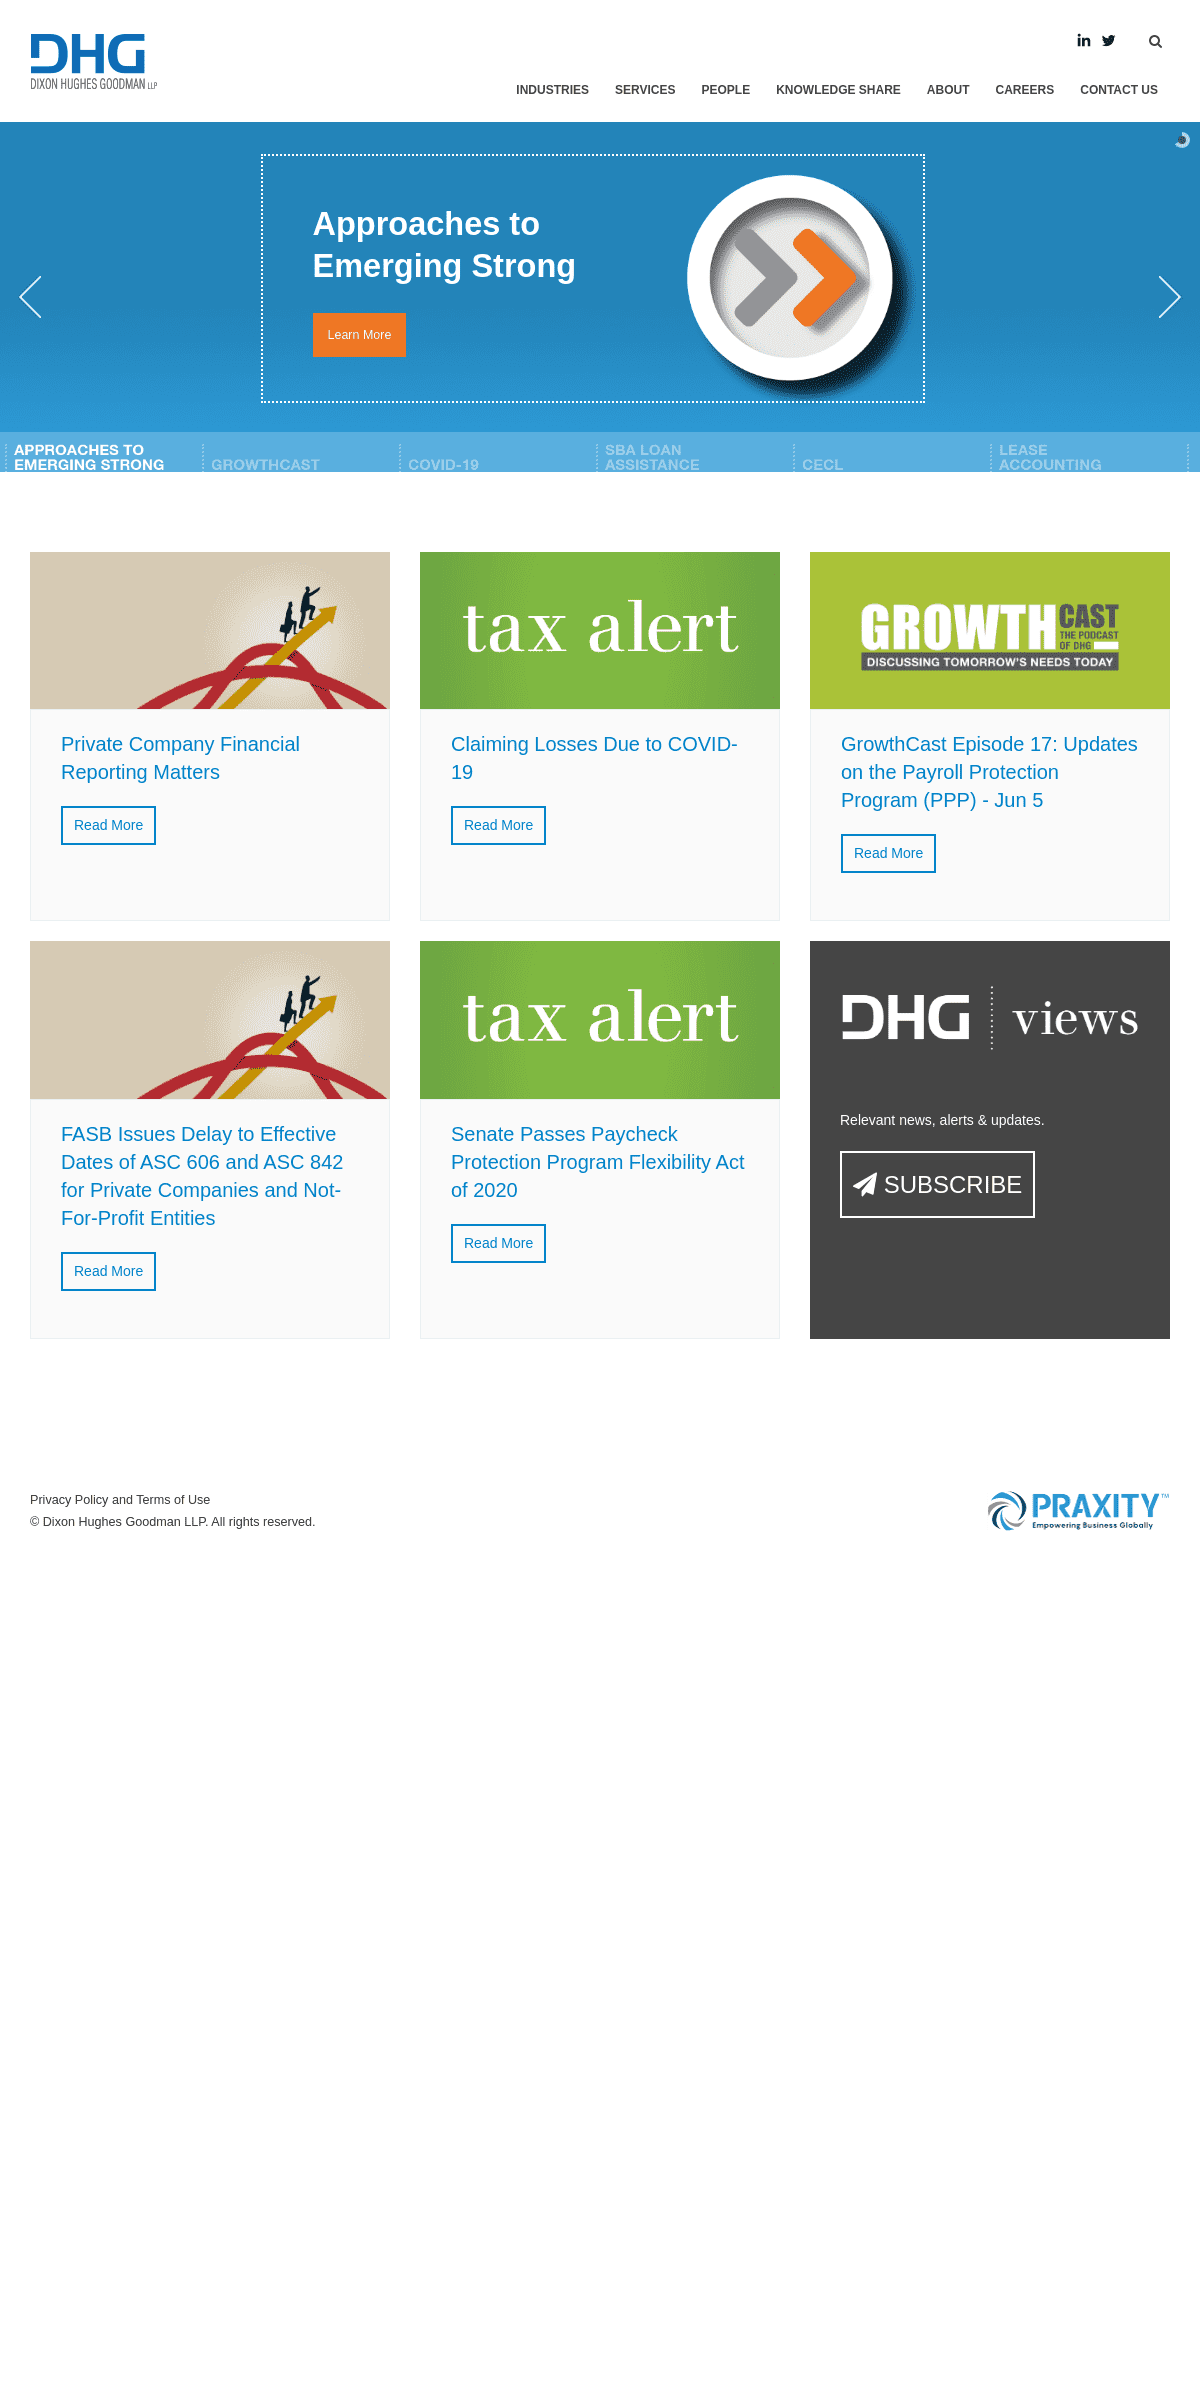 A complete backup of dhg.com